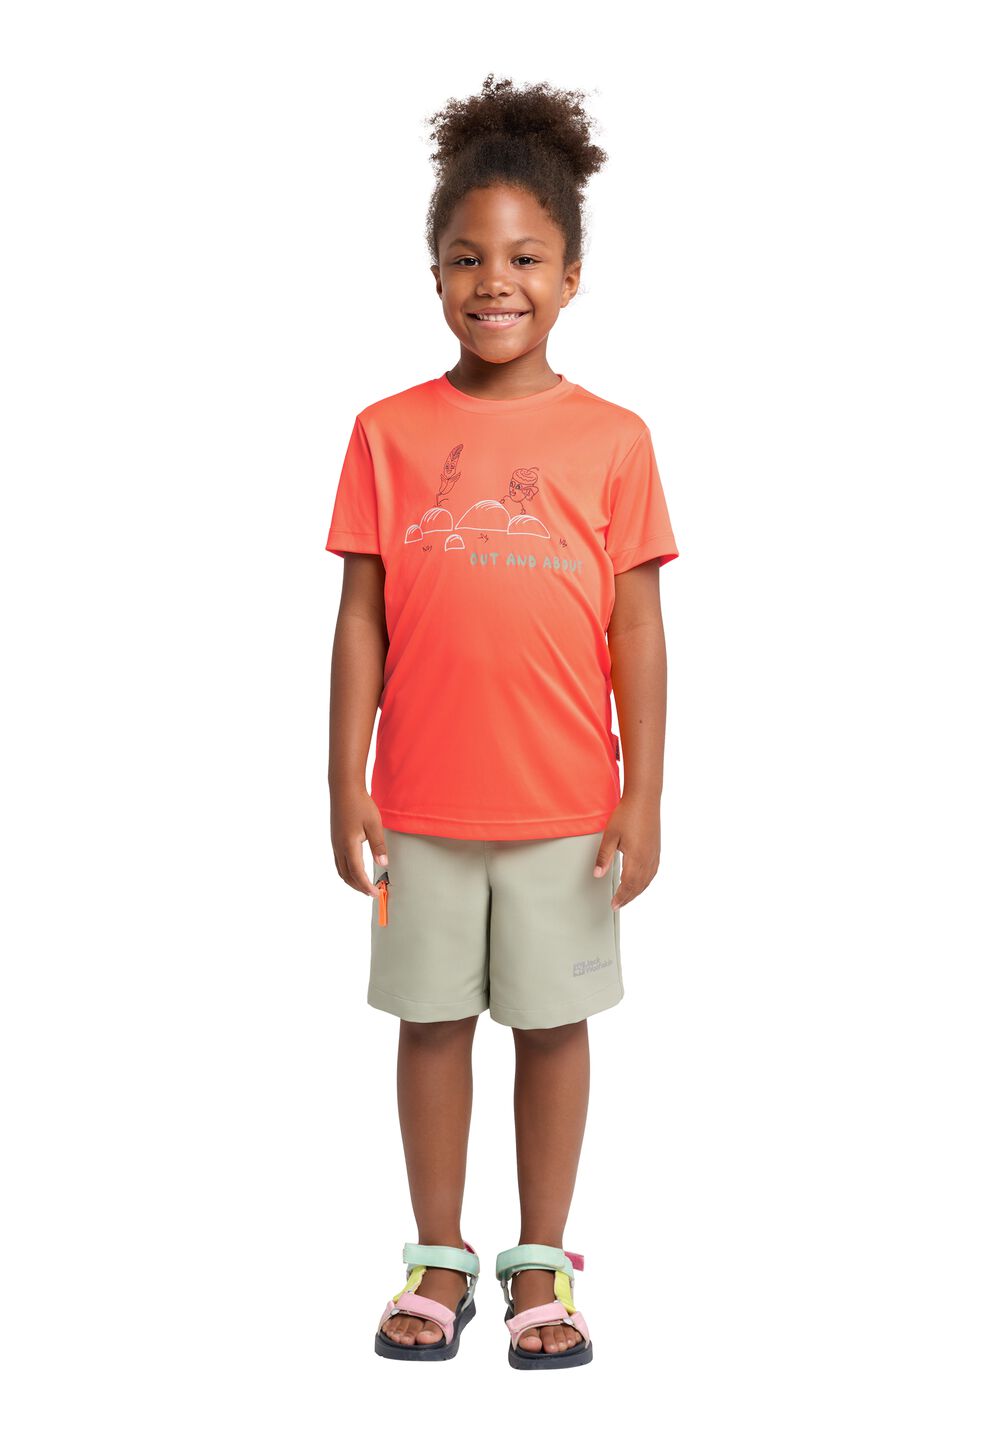 Jack Wolfskin OUT AND About T-Shirt Kids Functioneel shirt Kinderen 116 rood digital orange